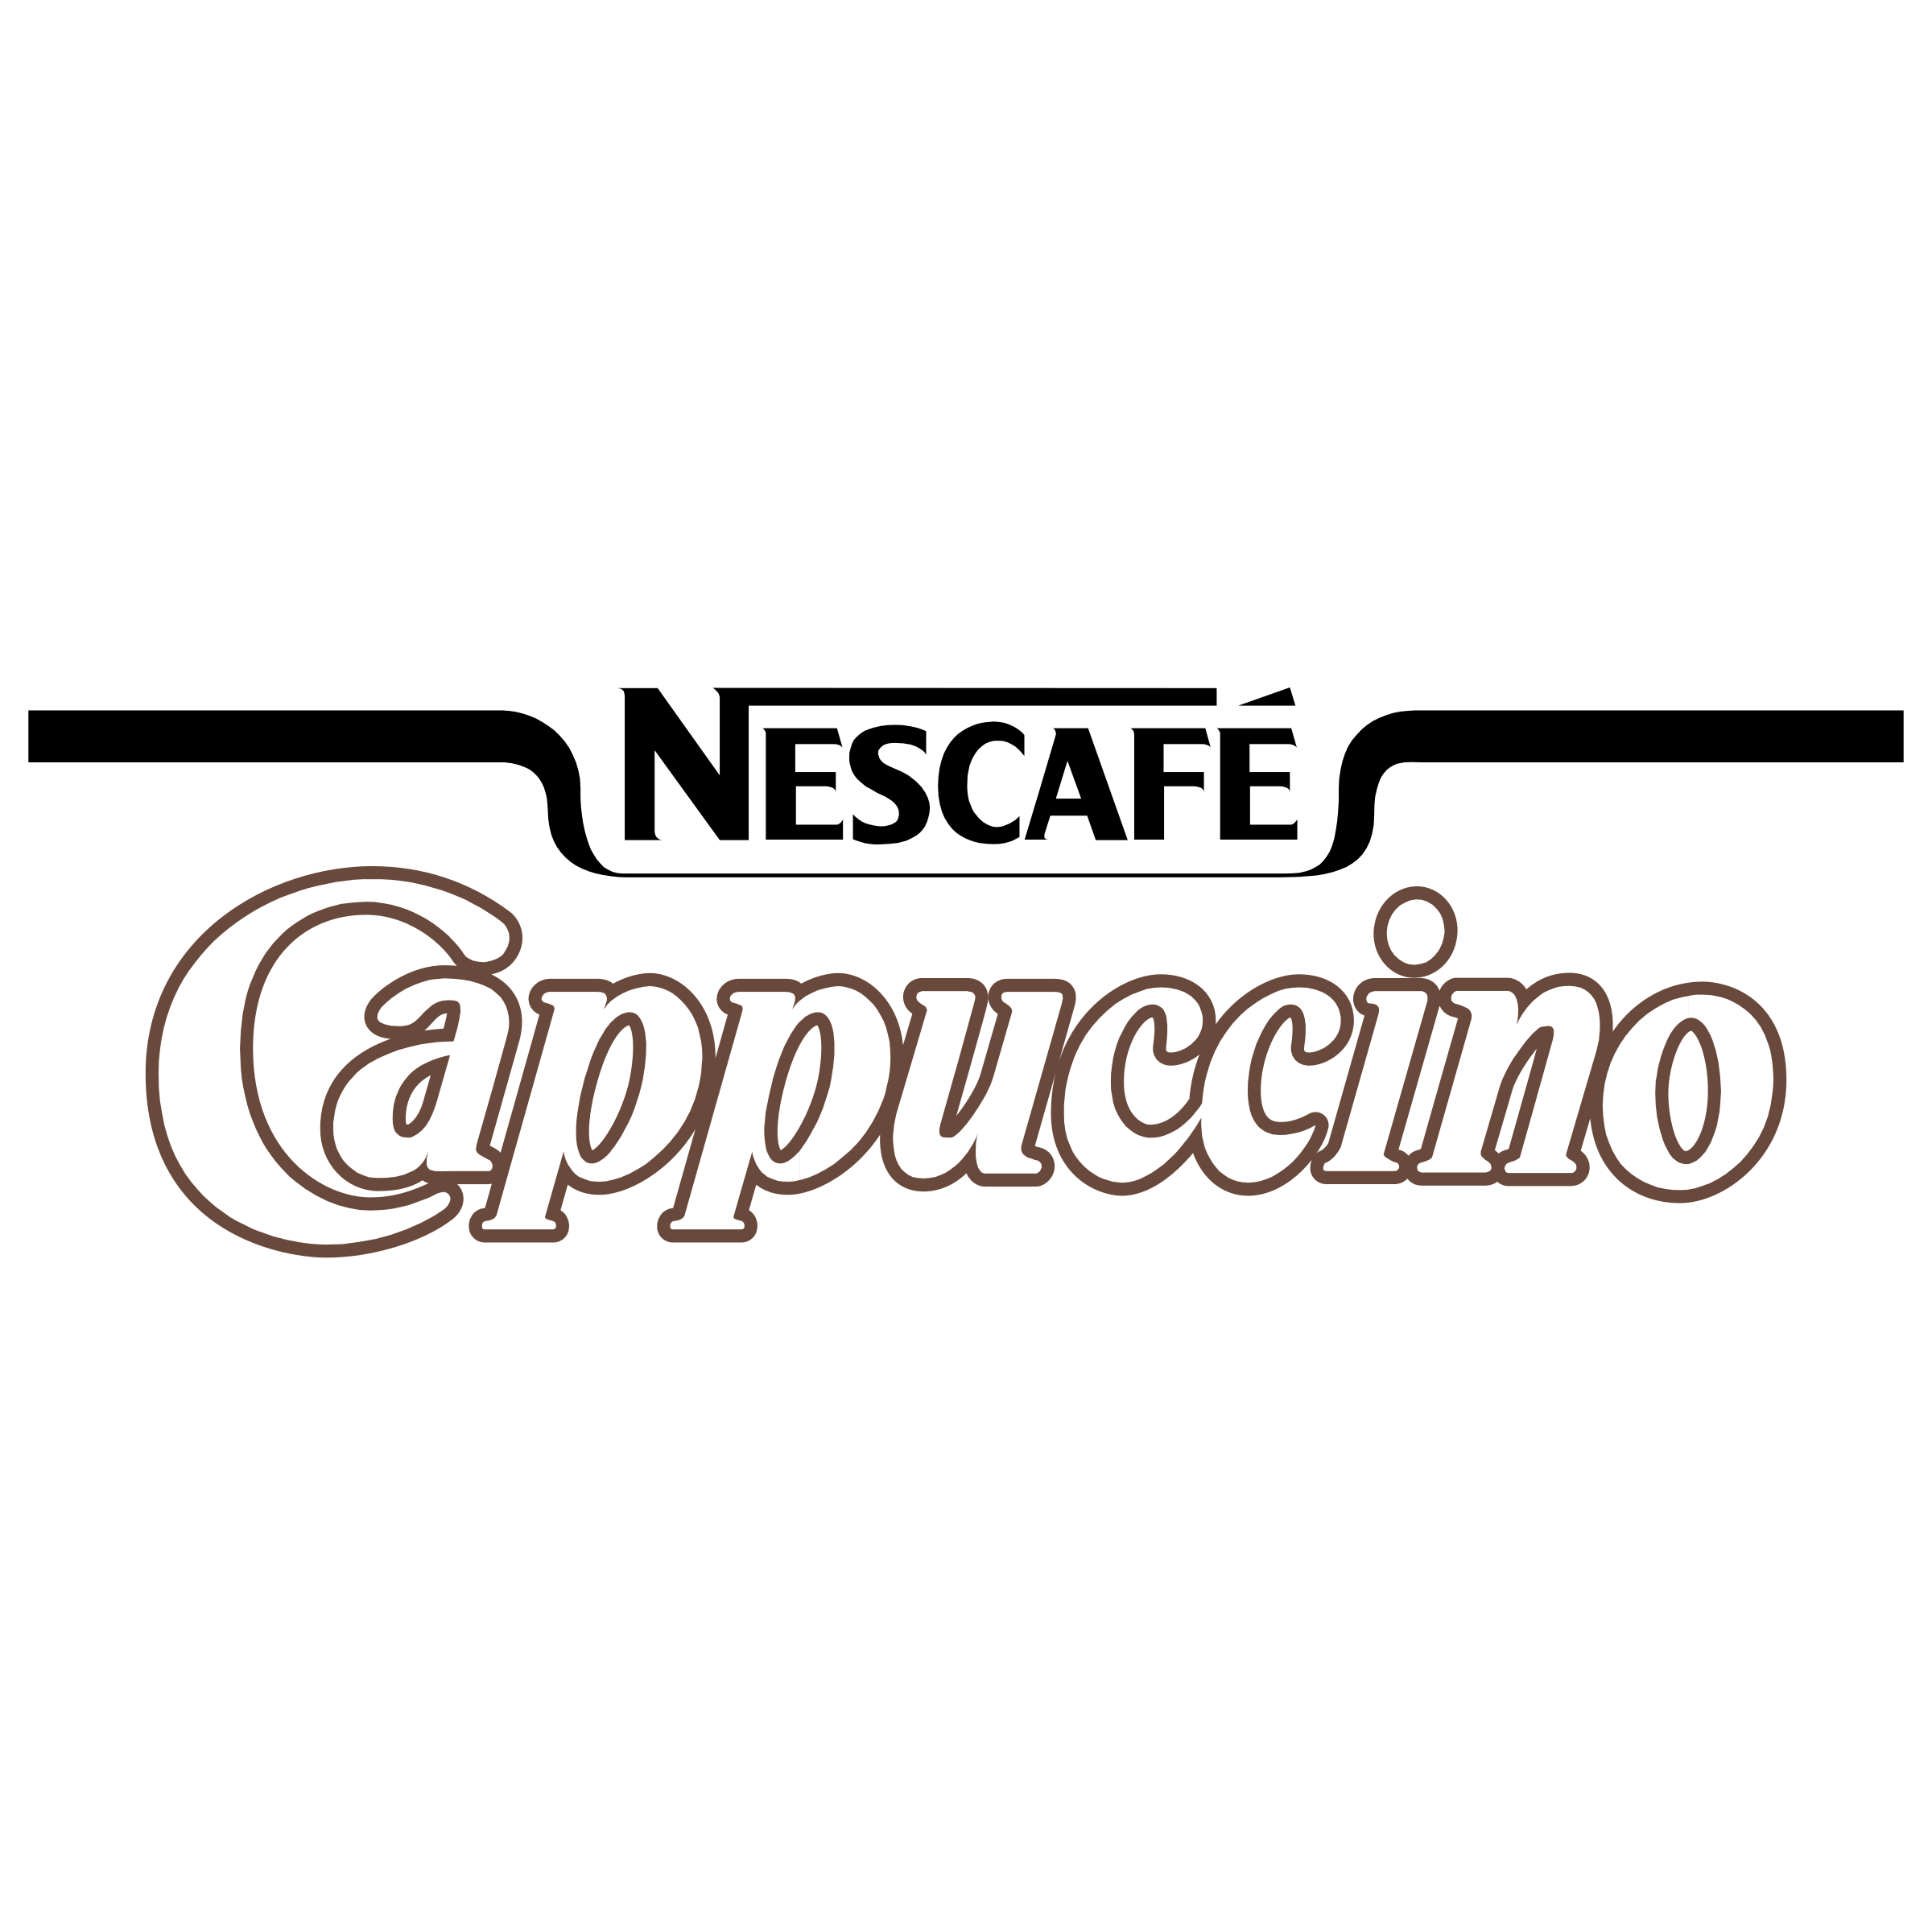 Cappuccino Logo - Nescafe Cappuccino Logo PNG Transparent & SVG Vector